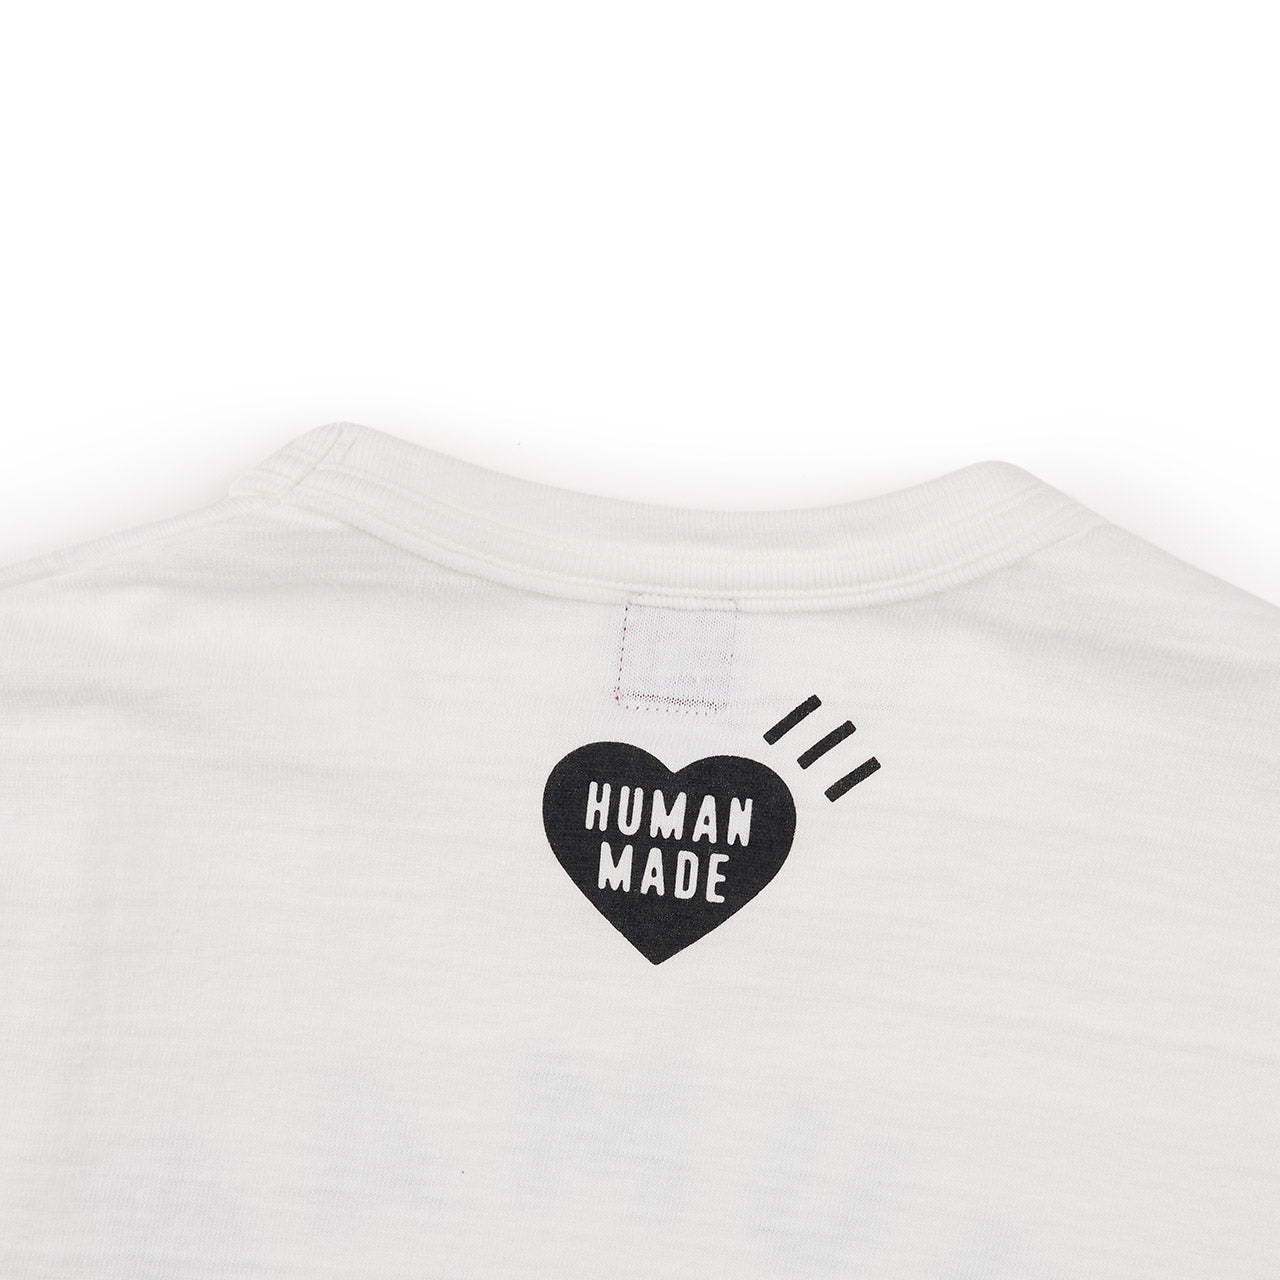 human made graphic t-shirt #13 (white) HM25TE014 - a.plus store